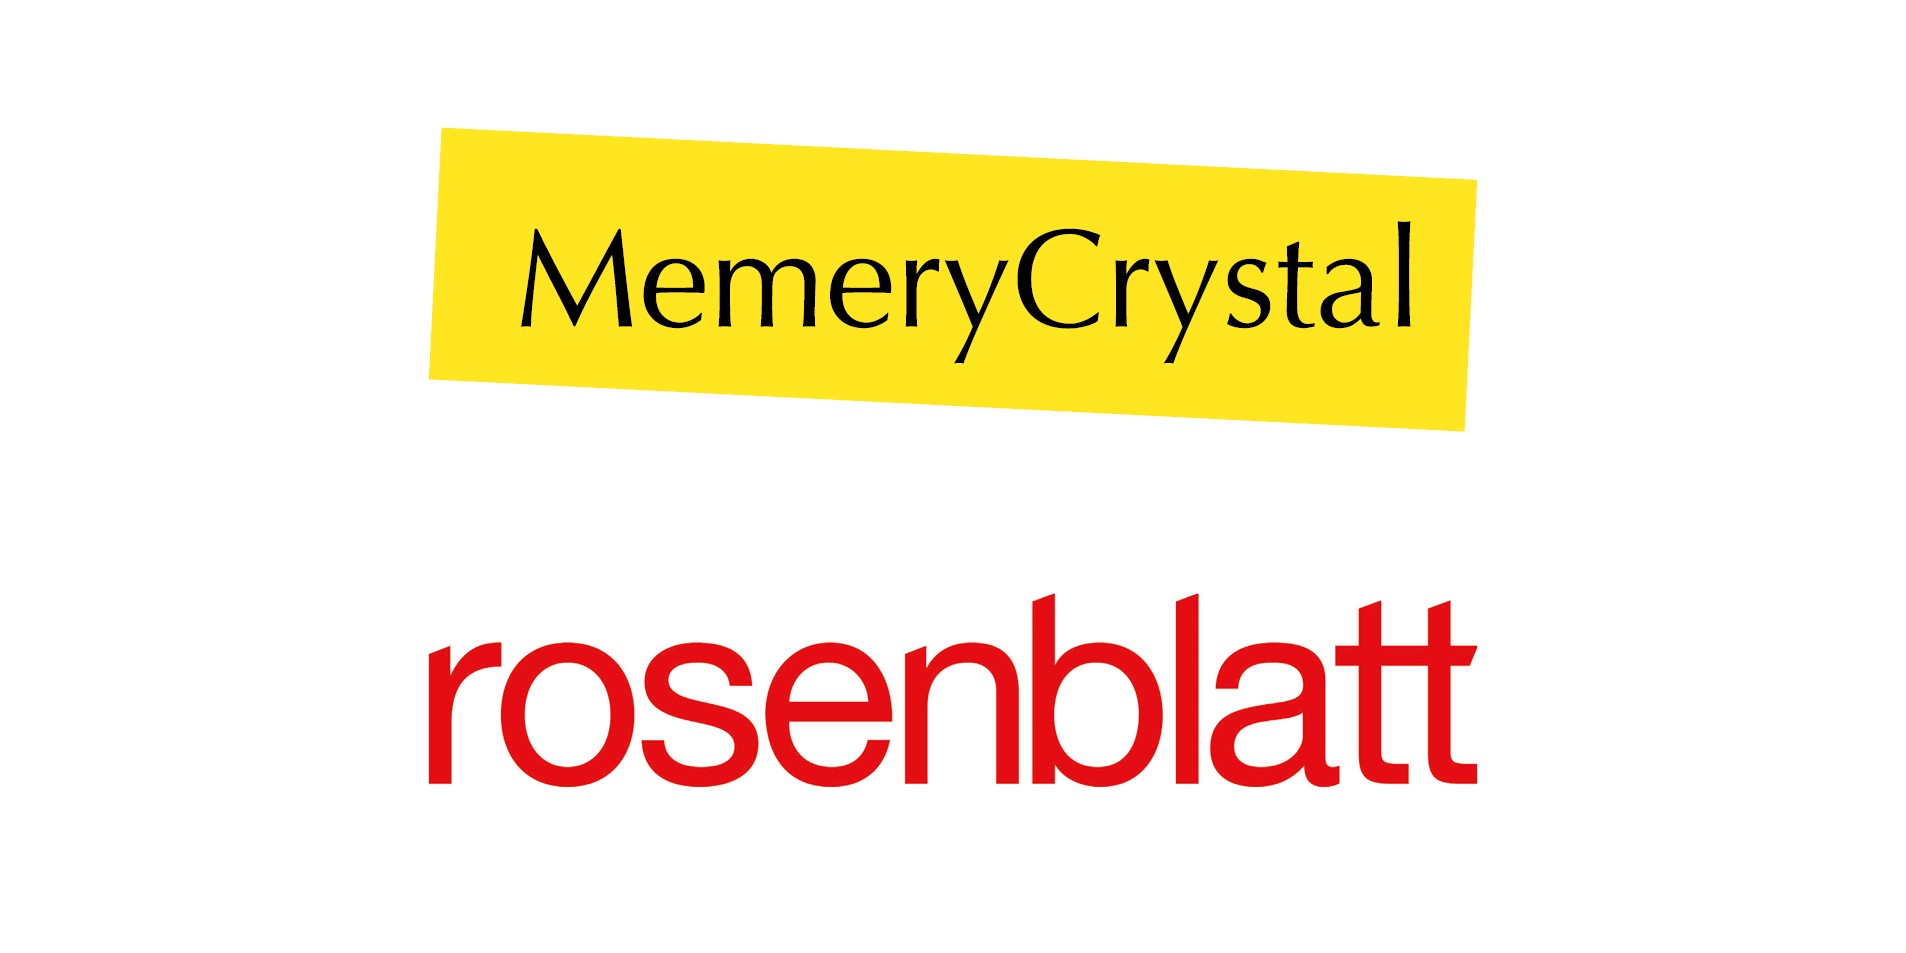 Memery Crystal and Rosenblatt